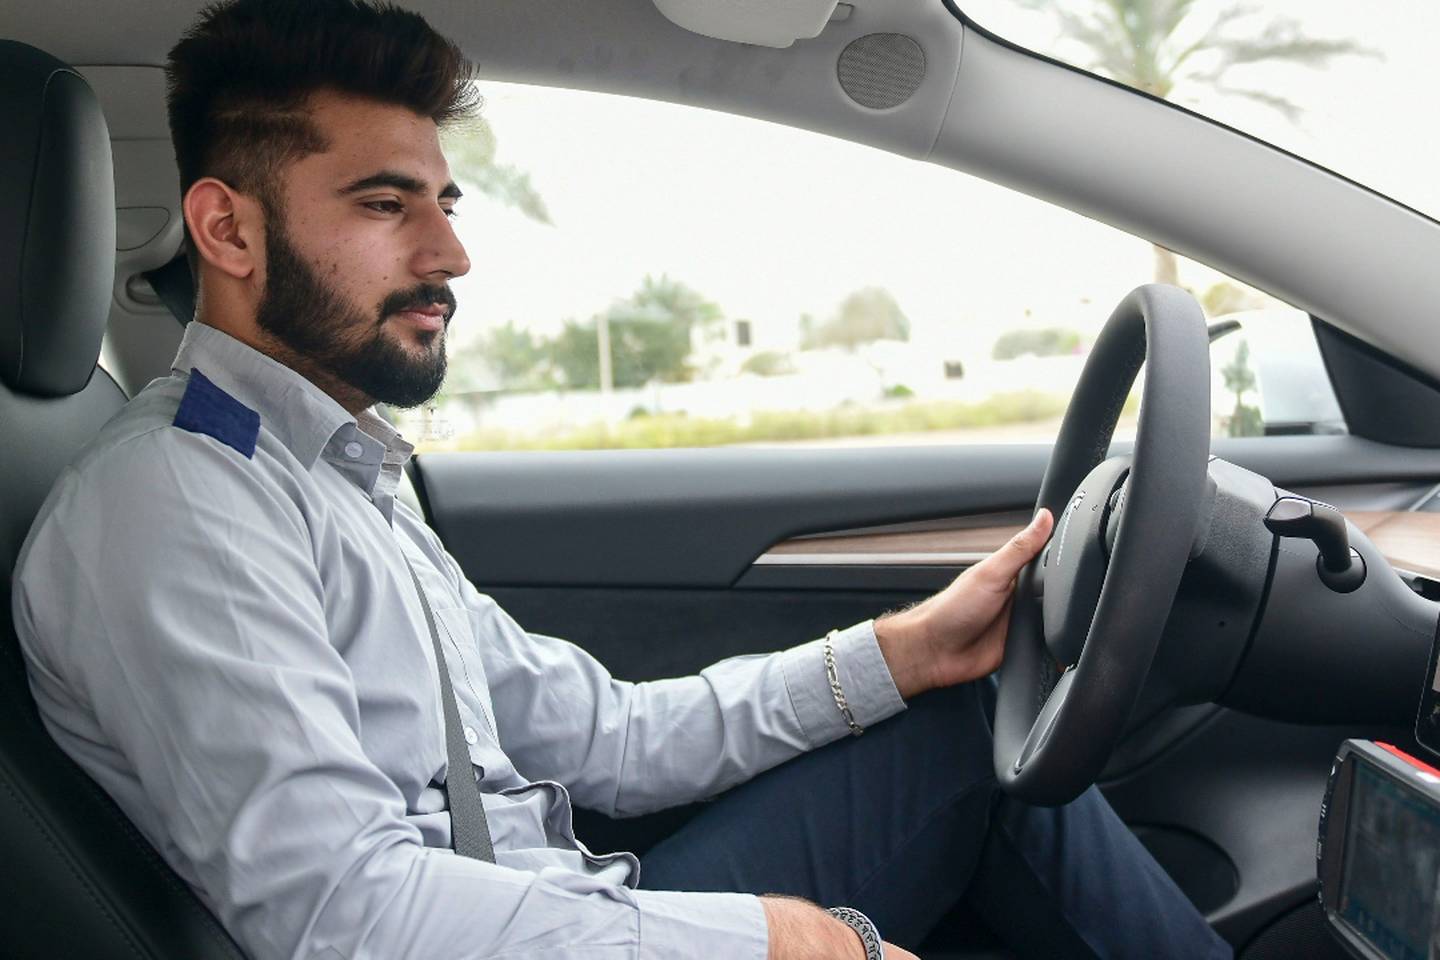 A look inside Abu Dhabi's new Tesla taxis